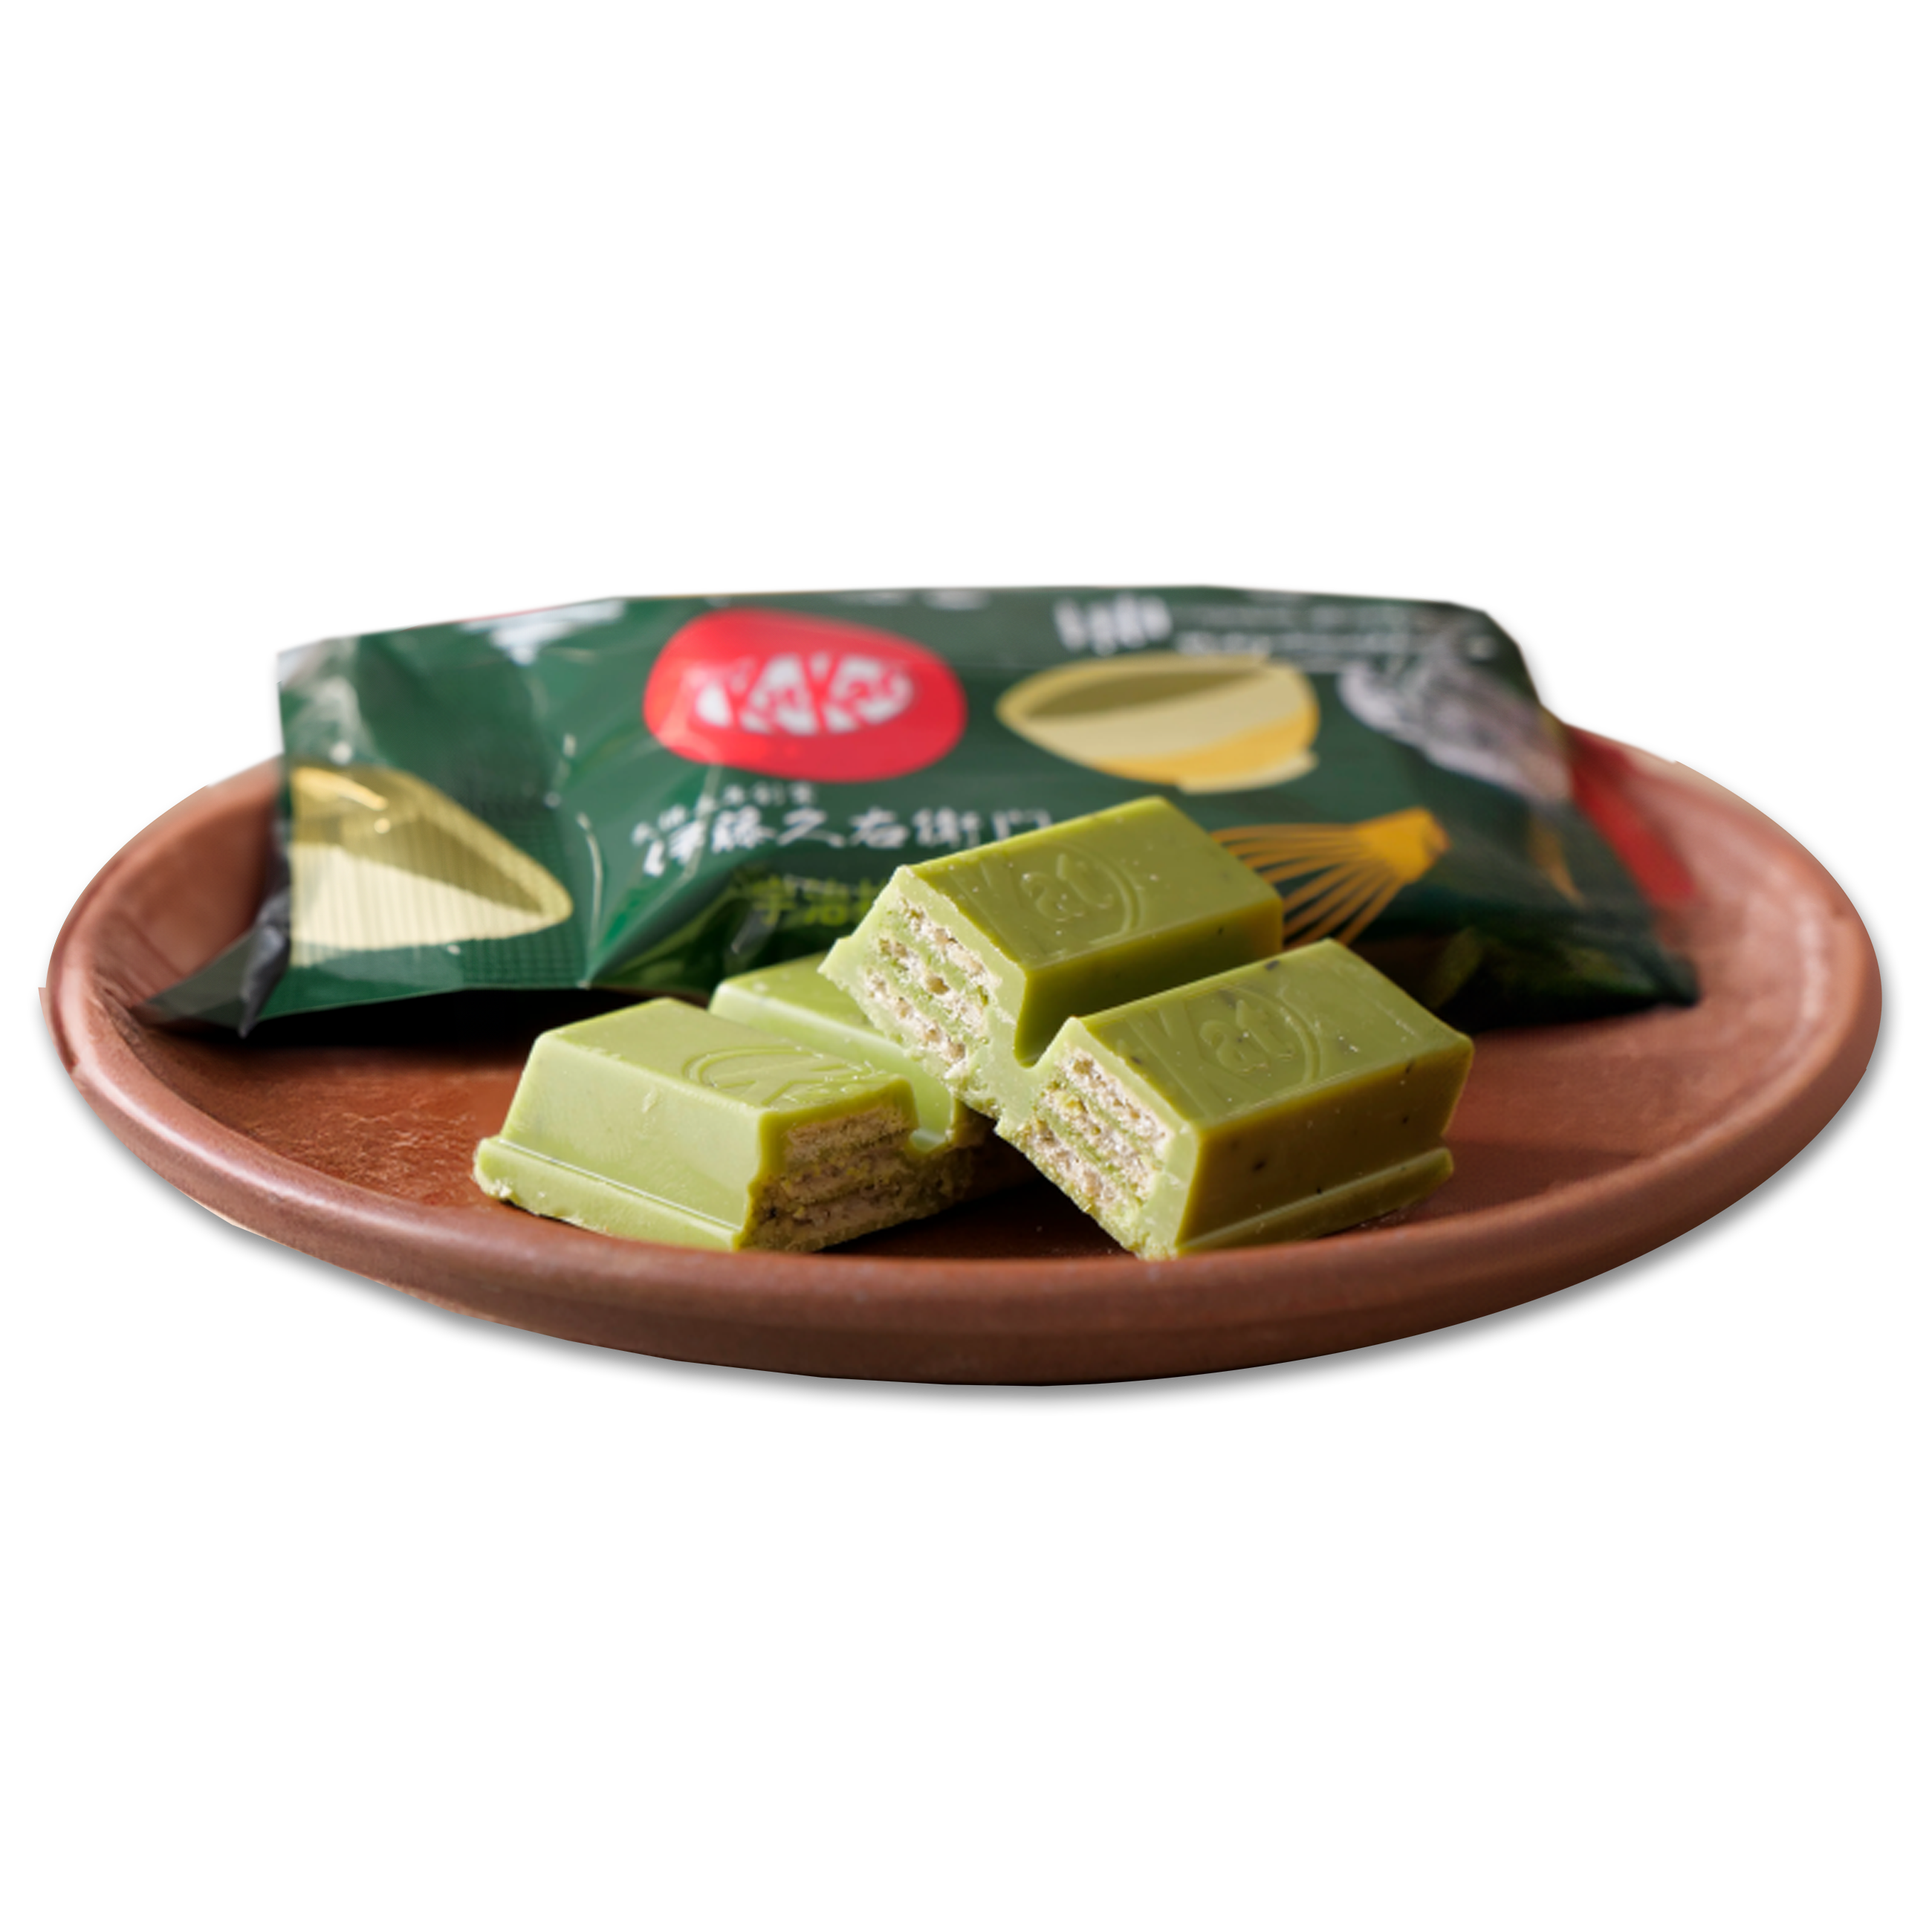 KitKat Matcha grüner Tee: Eine besondere KitKat-Sorte aus Japan